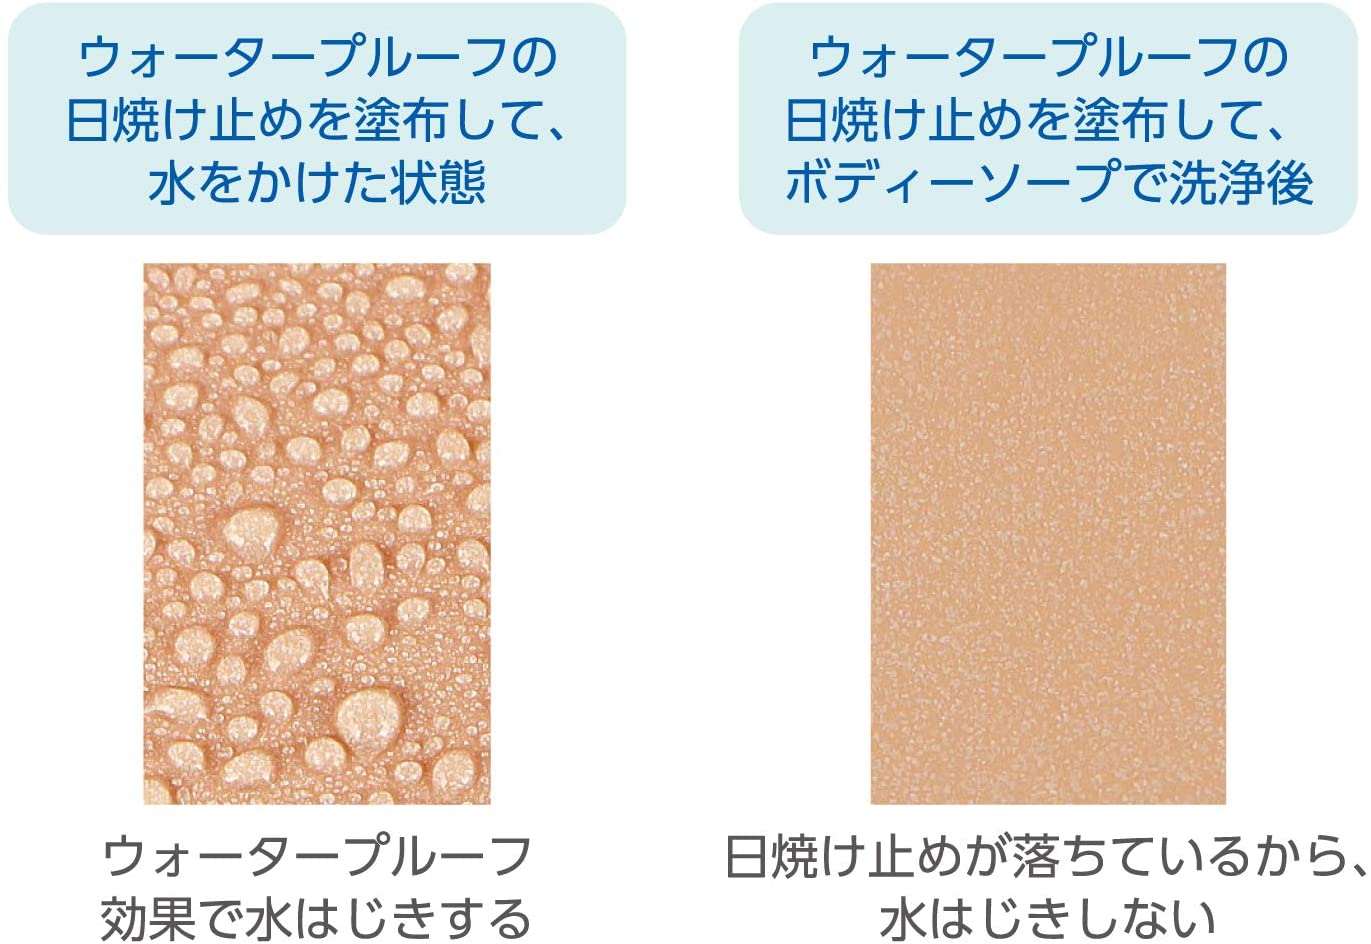 Coppertone(コパトーン) パーフェクトUVカット キレイ魅せUV ほそみせ肌の商品画像サムネ3 